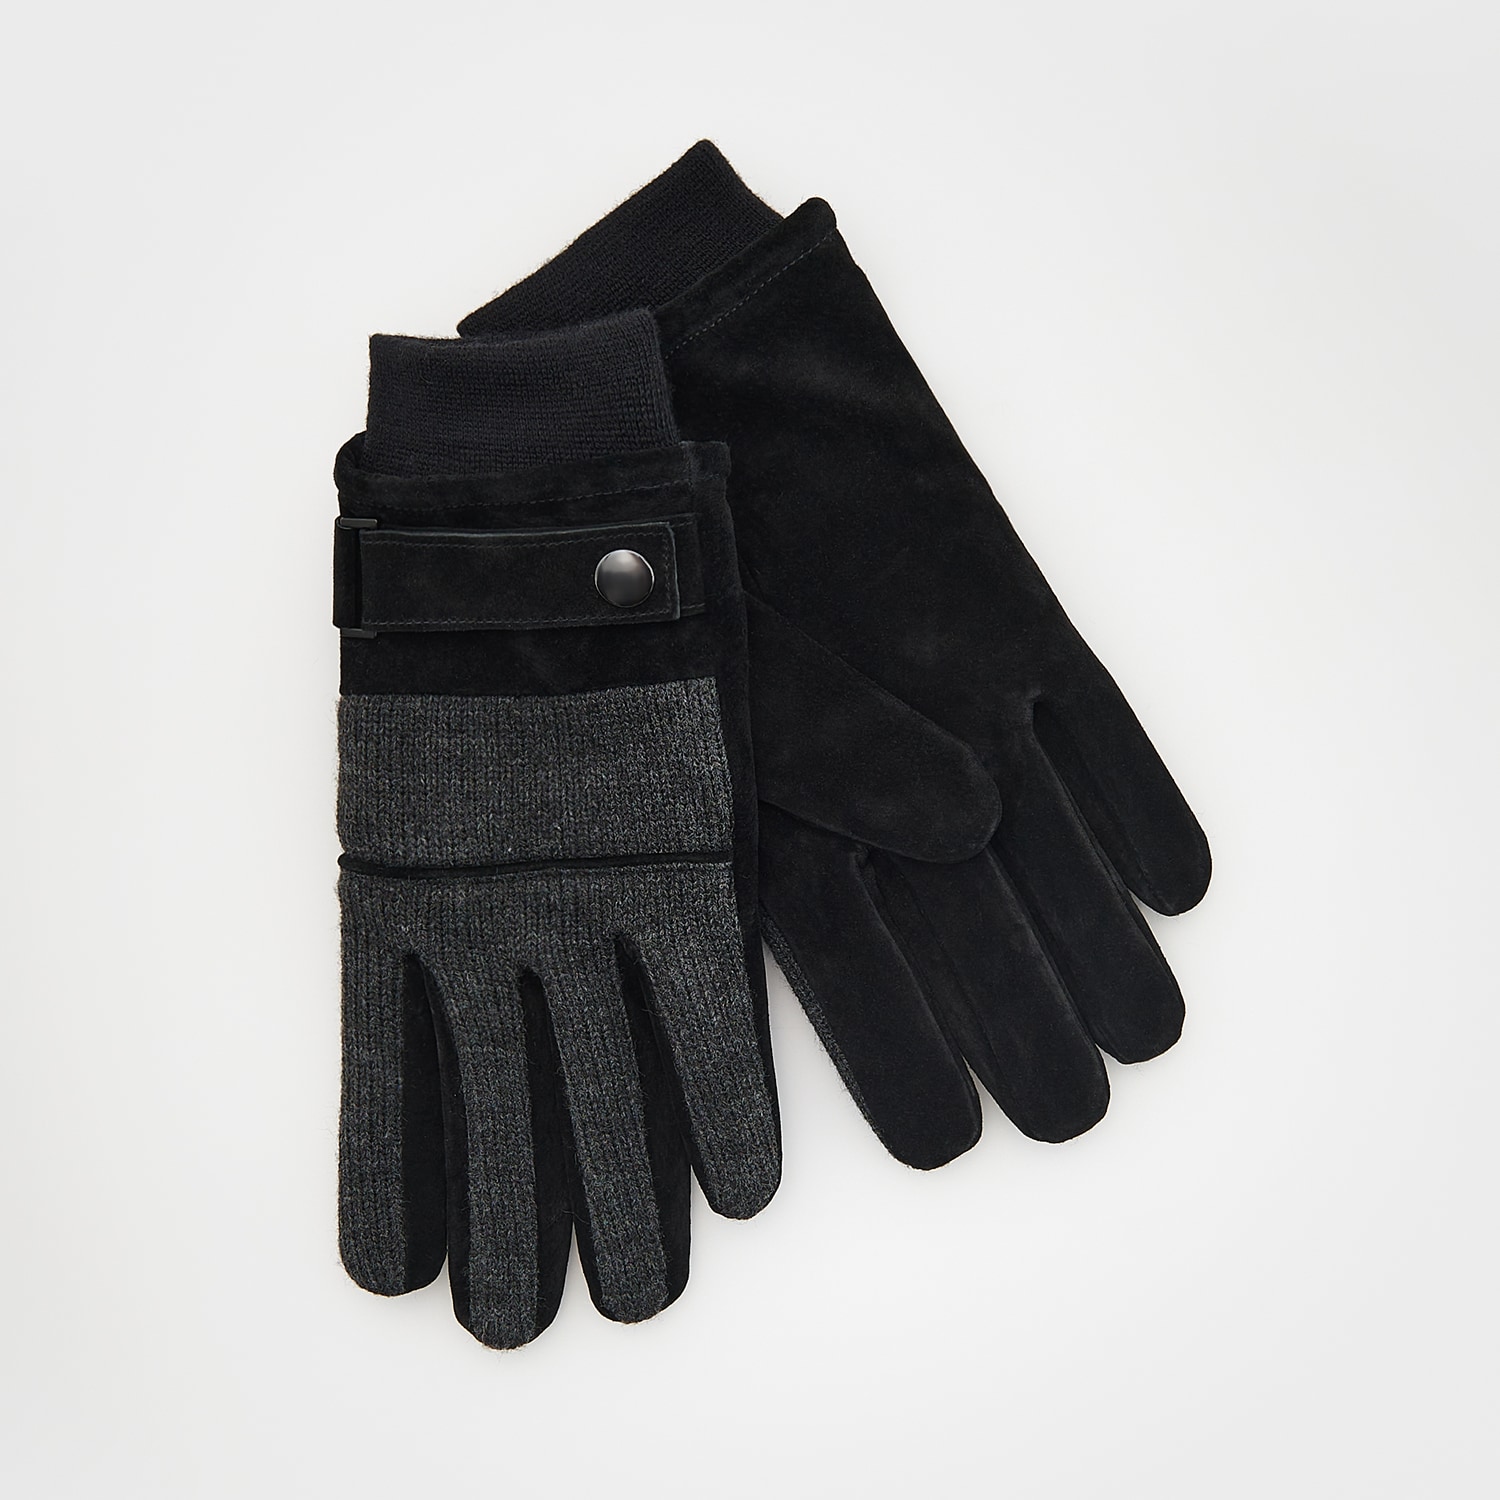 Reserved - Mănuși din piele cu închidere cu nit presat - Gri